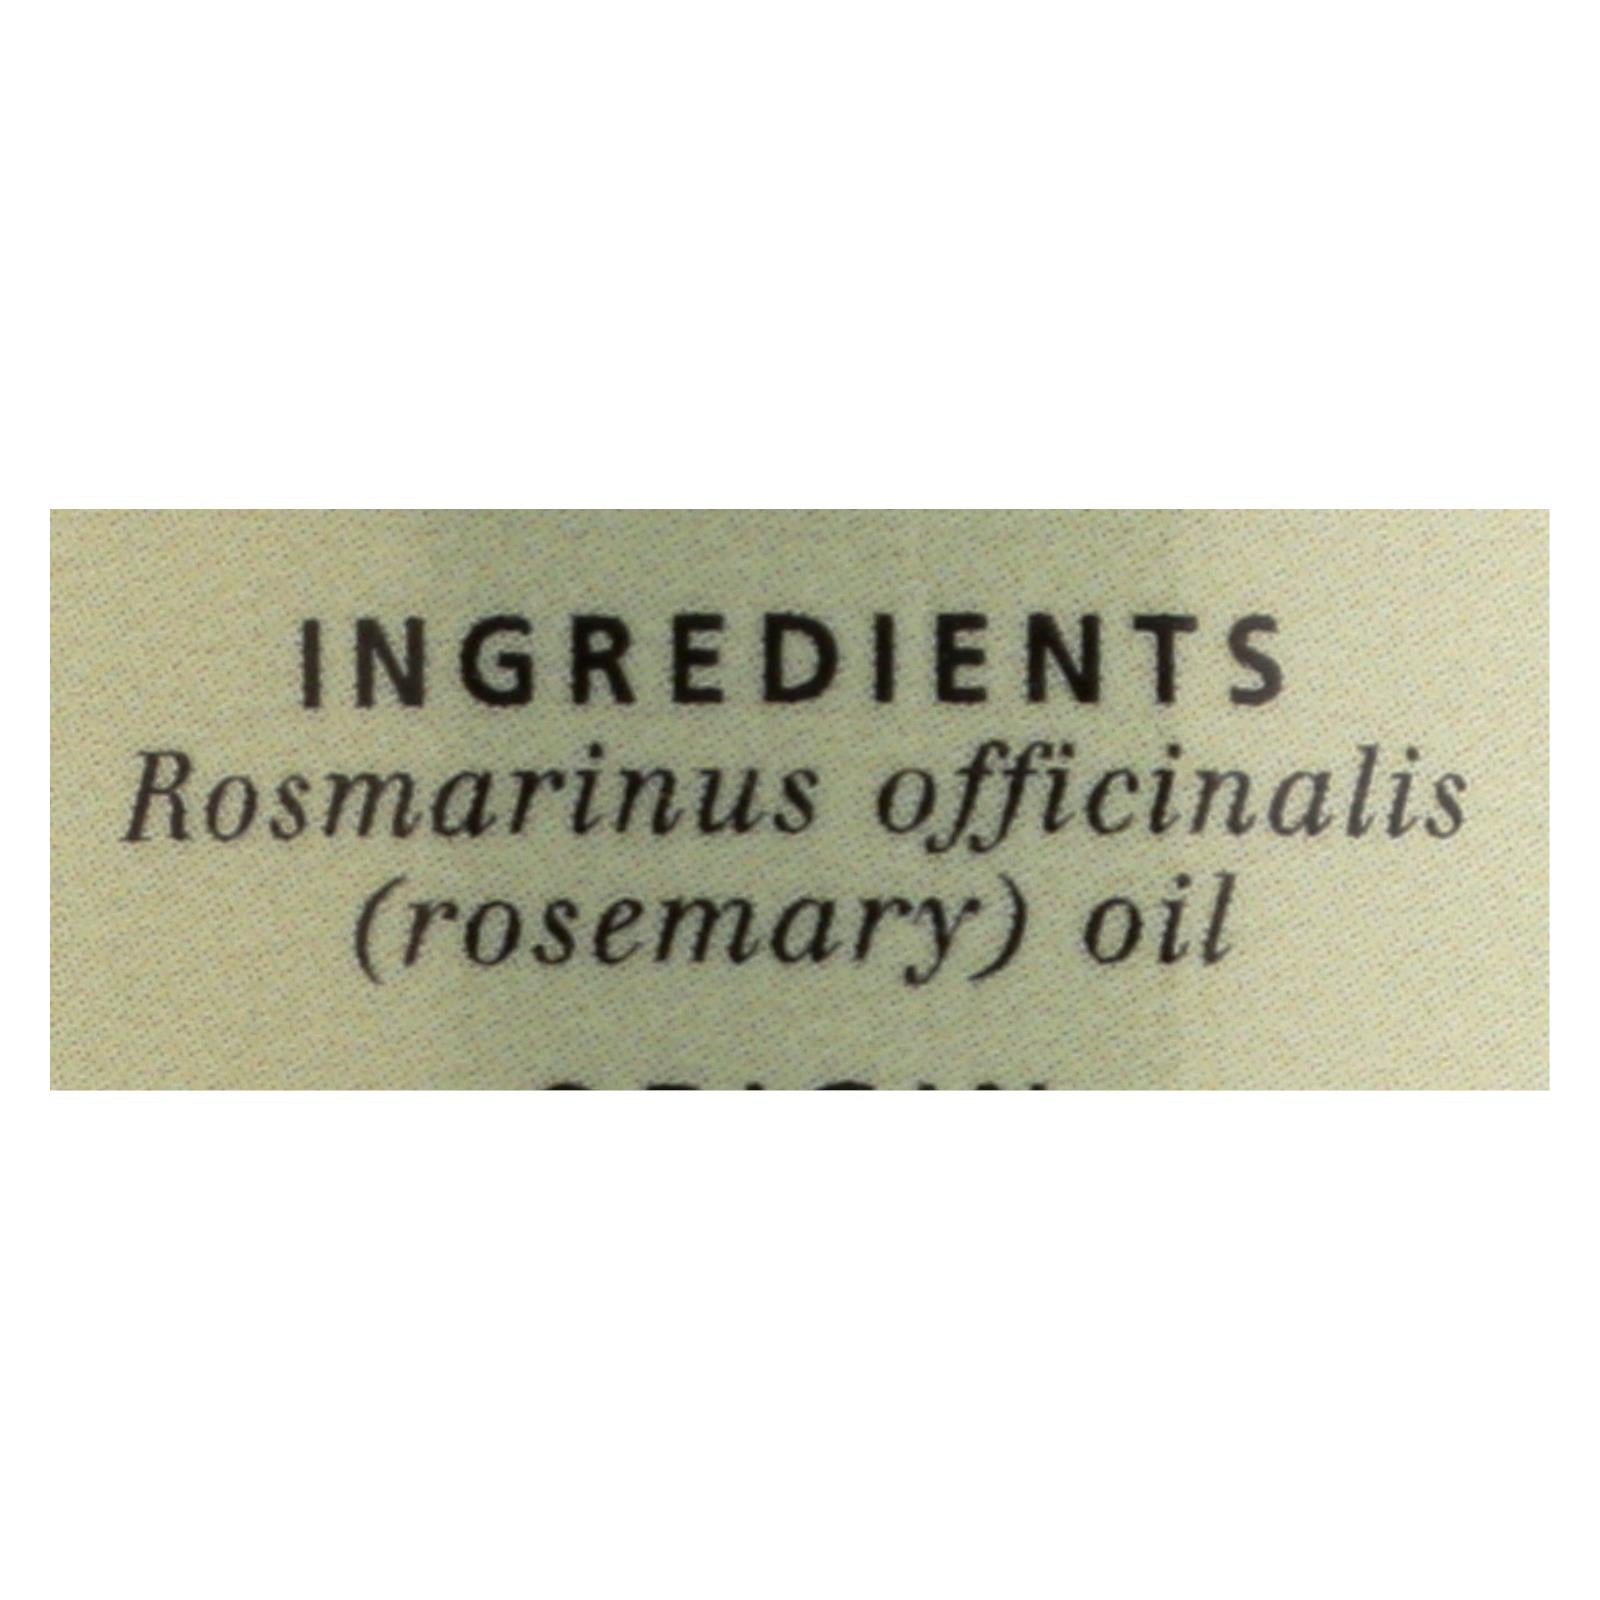 Aura Cacia - 100% Pure Essential Oil Rosemary Cleansing - 2 Oz